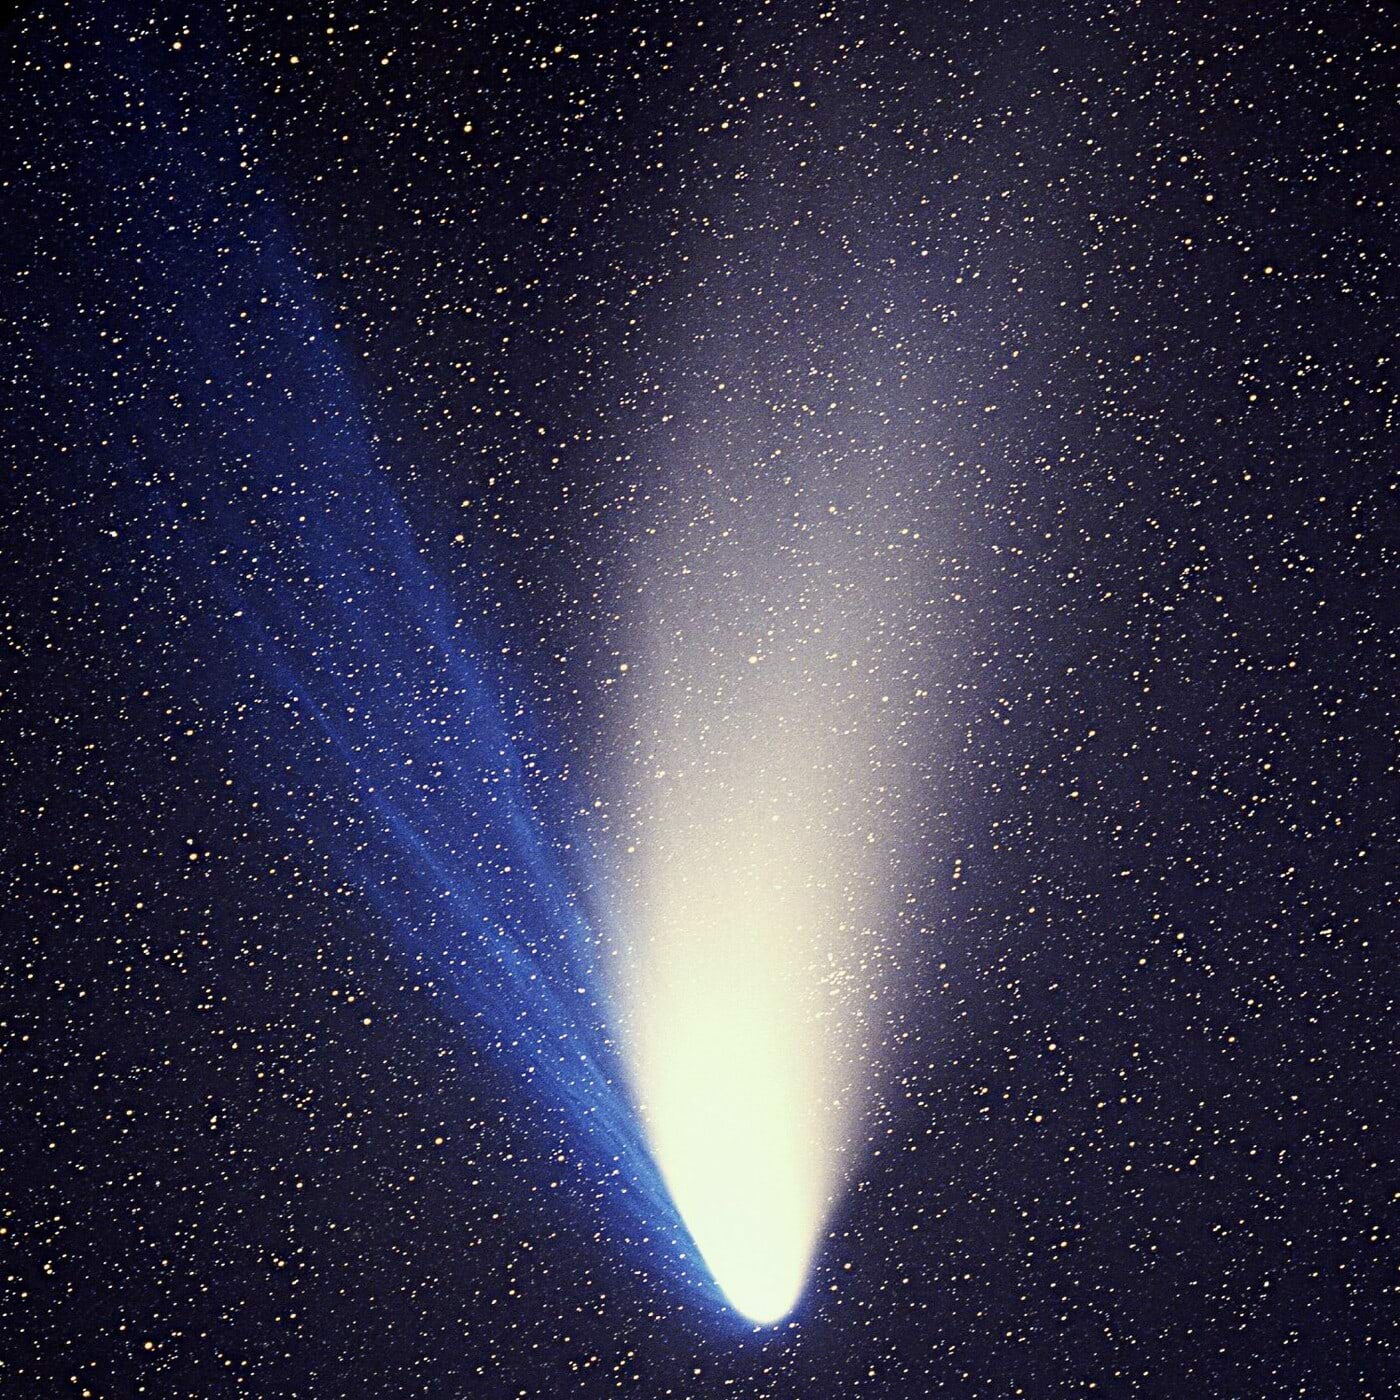 Komeet C/1995 O1 (Hale-Bopp)